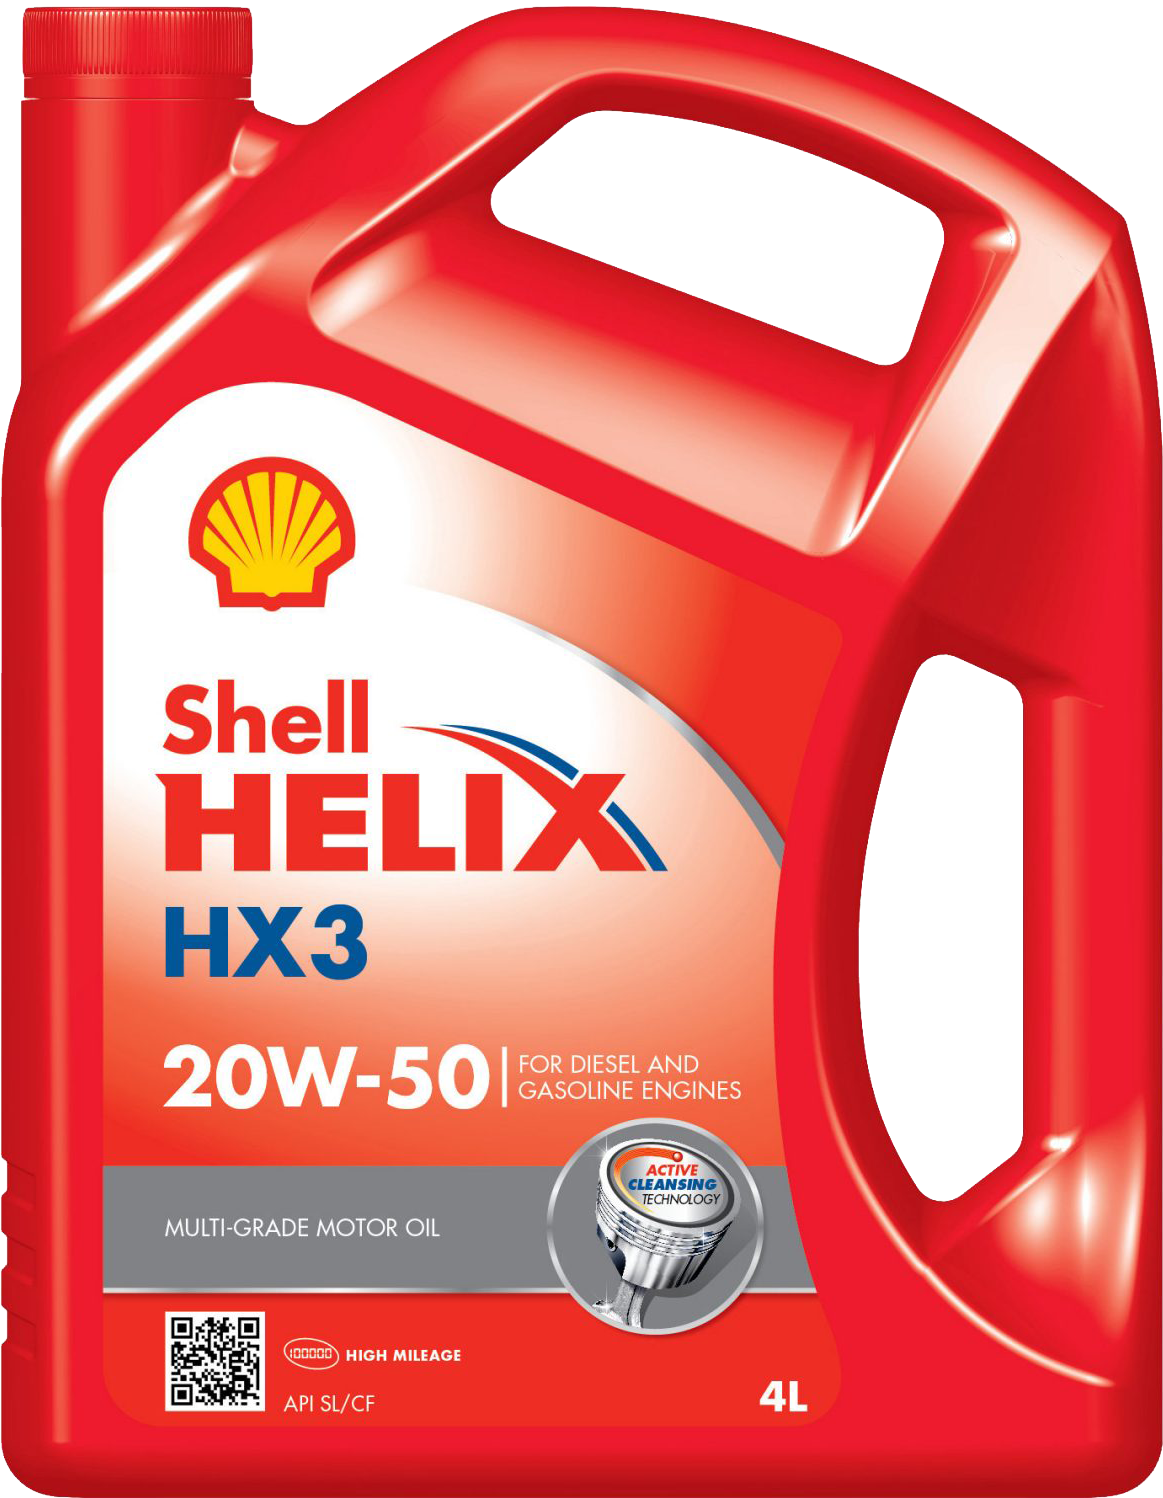 Shell Helix Hx3 - Shell Helix Hx3 20w 50 Clipart (1163x1498), Png Download